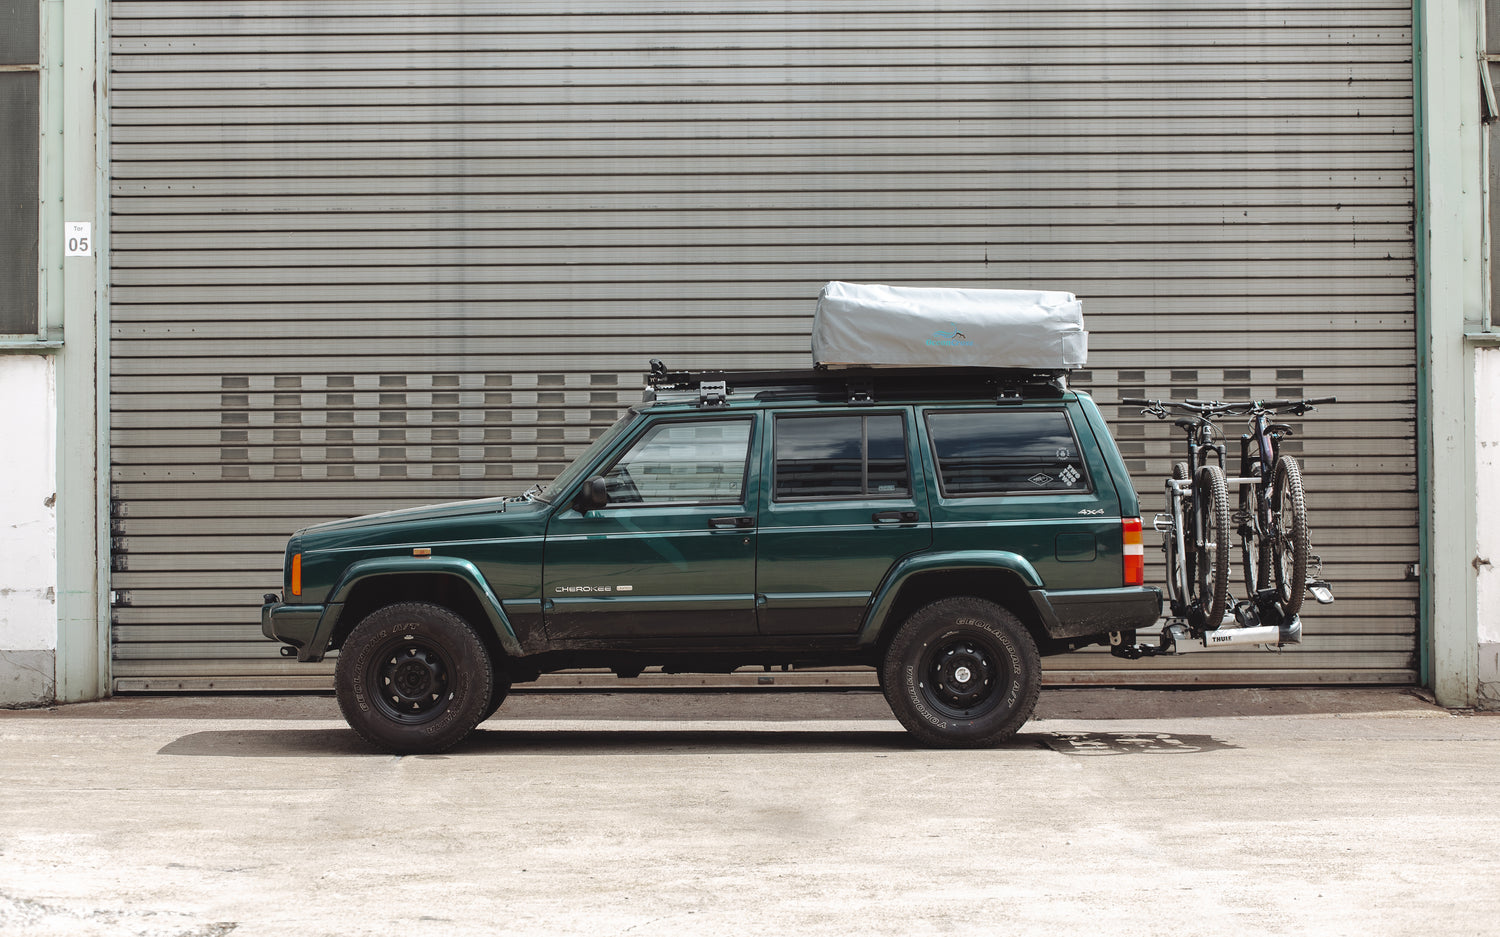 Green Jeep Cherokee with DOT Medium roof rack set